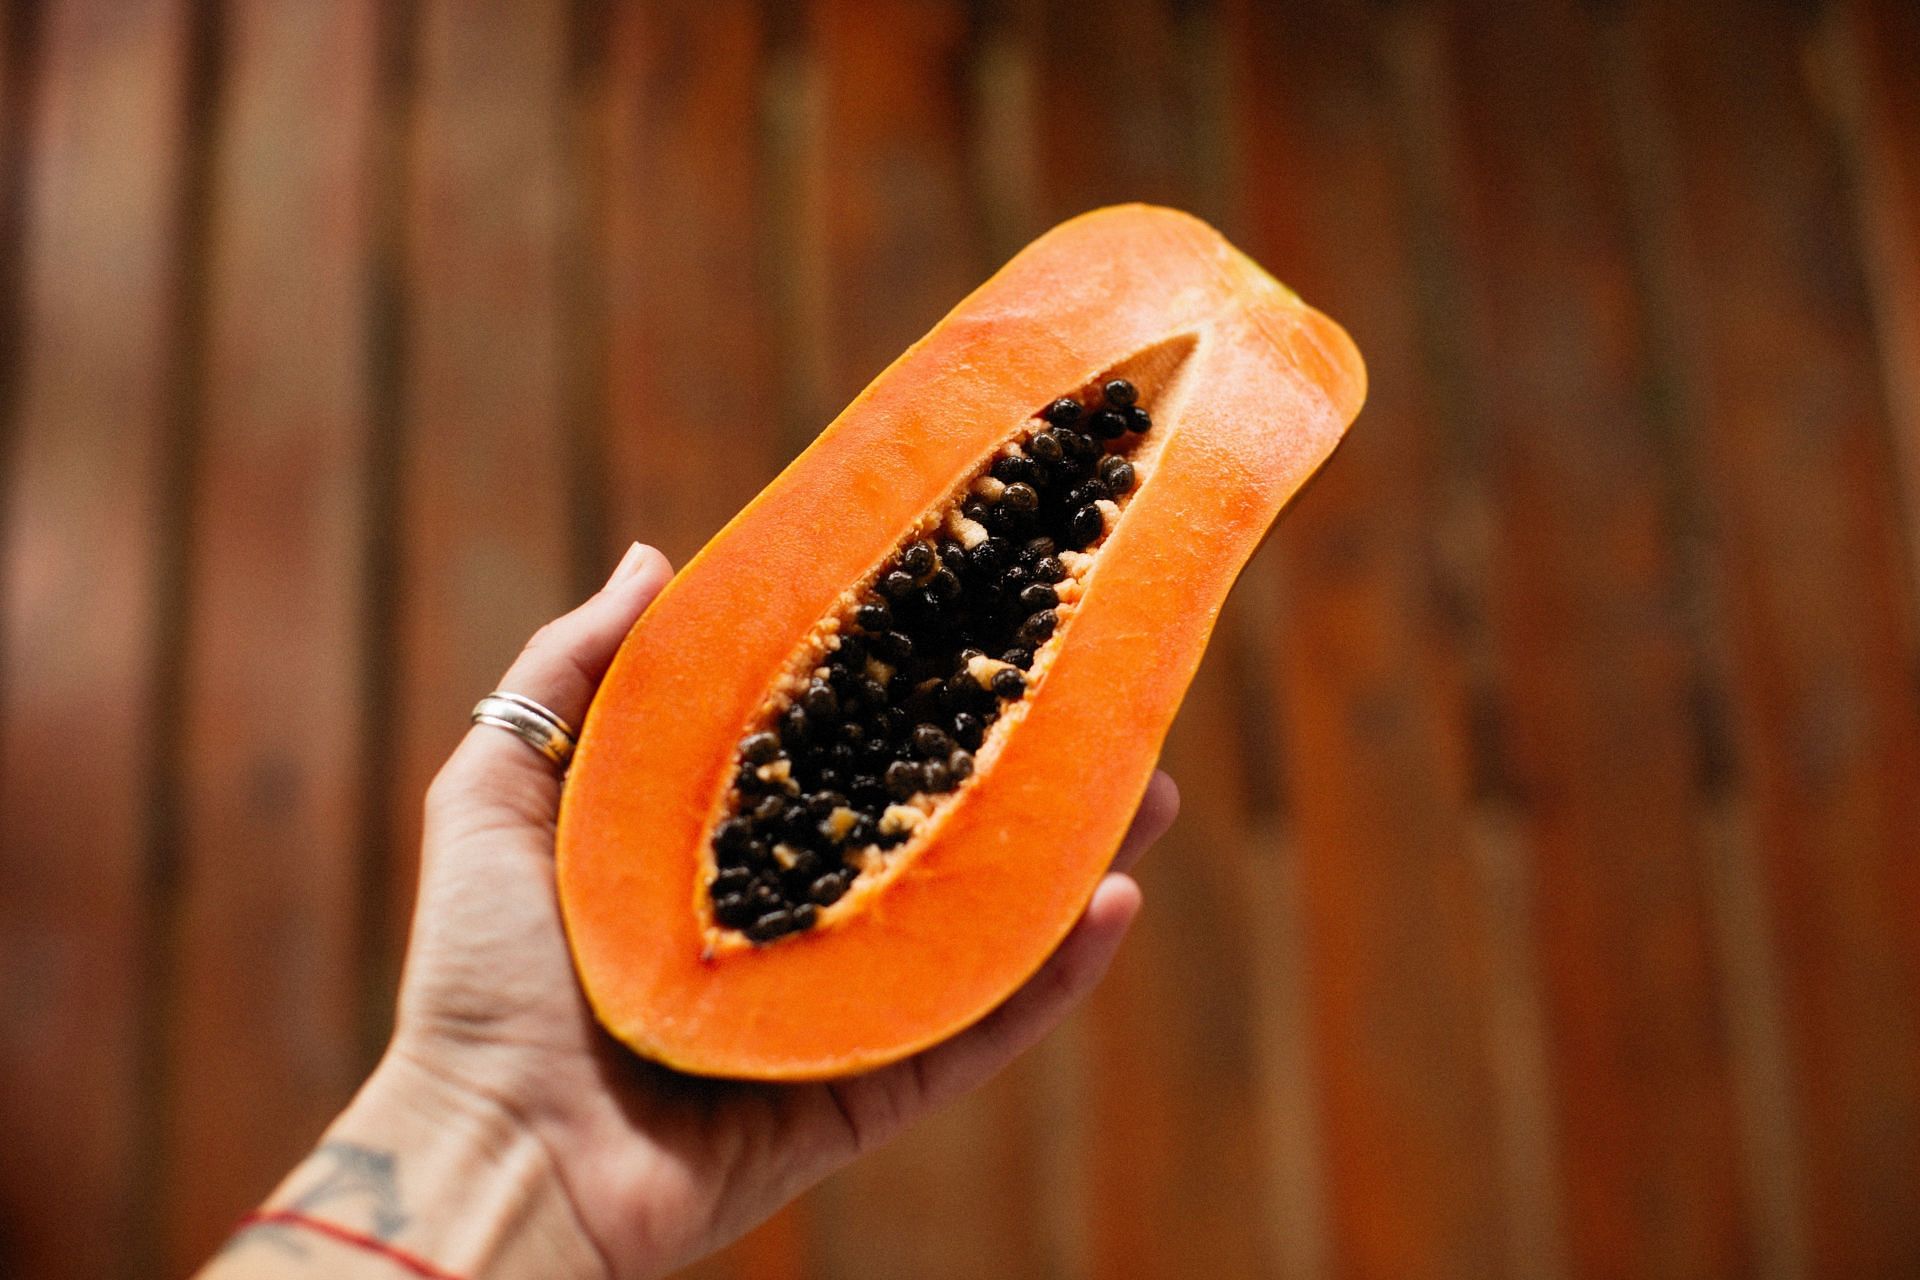 Papaya for constipation can help ease stomach pain (Image via Unsplash/ Alexey Demidov)